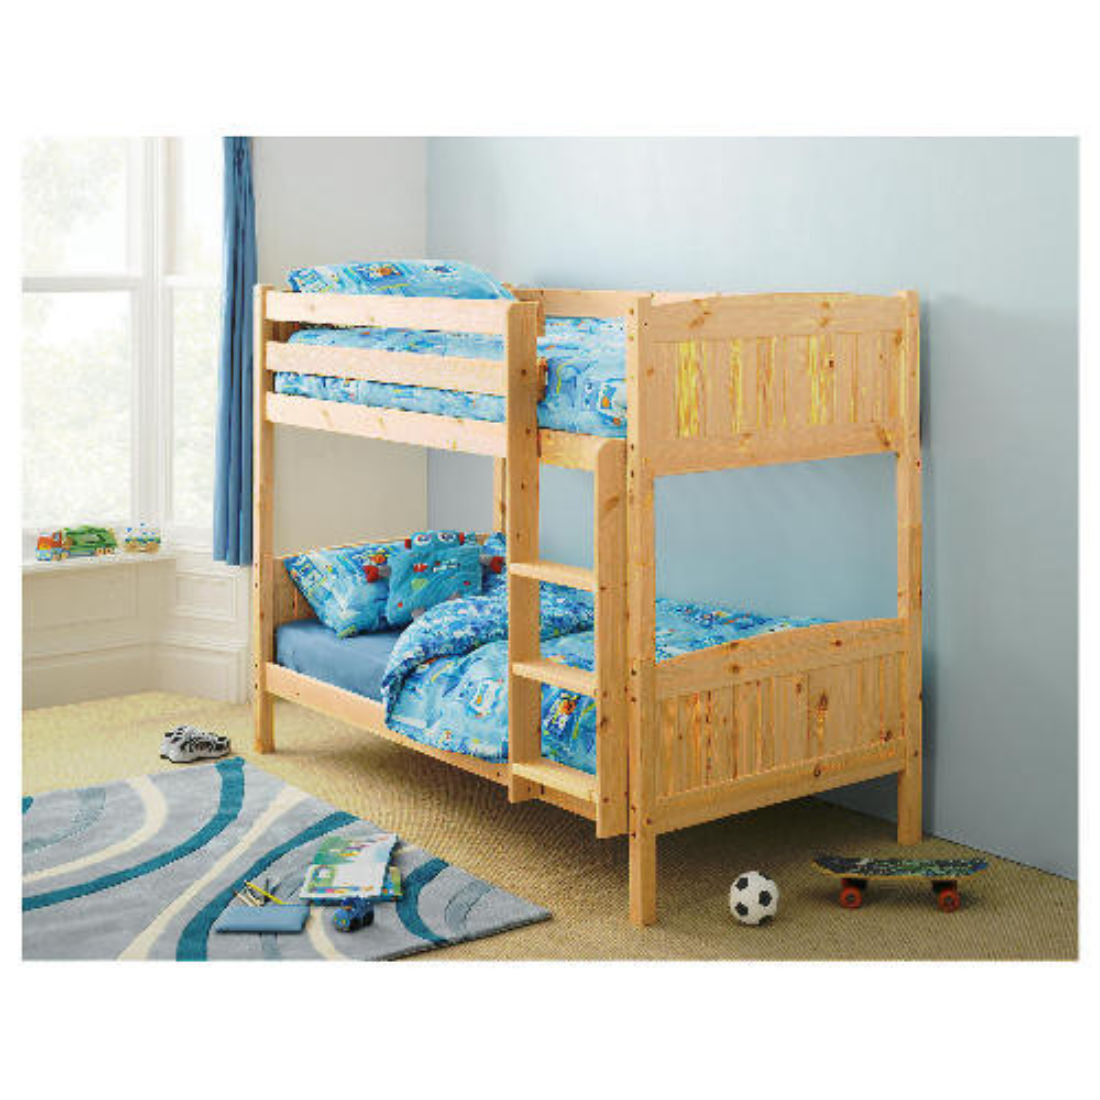 ... to fit Ashley Pine Detachable Bunk Bed mattress size is 175 x 75 cm